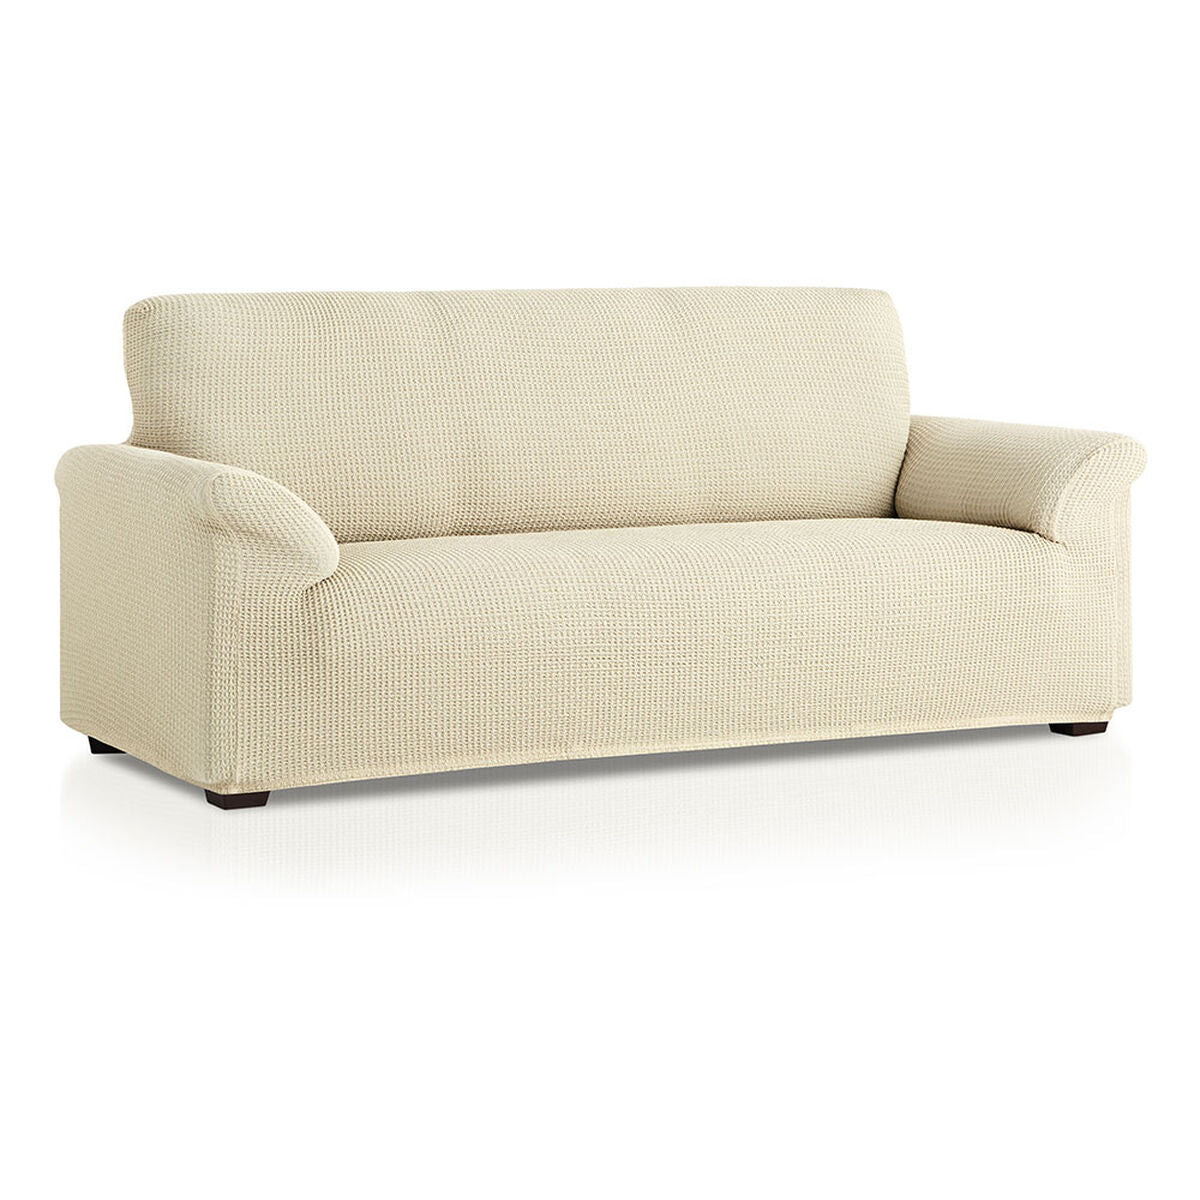 Stretch cover for Belmarti Bali 3-seater sofa 180-230 x 40-65 x 80-110 cm Ivory